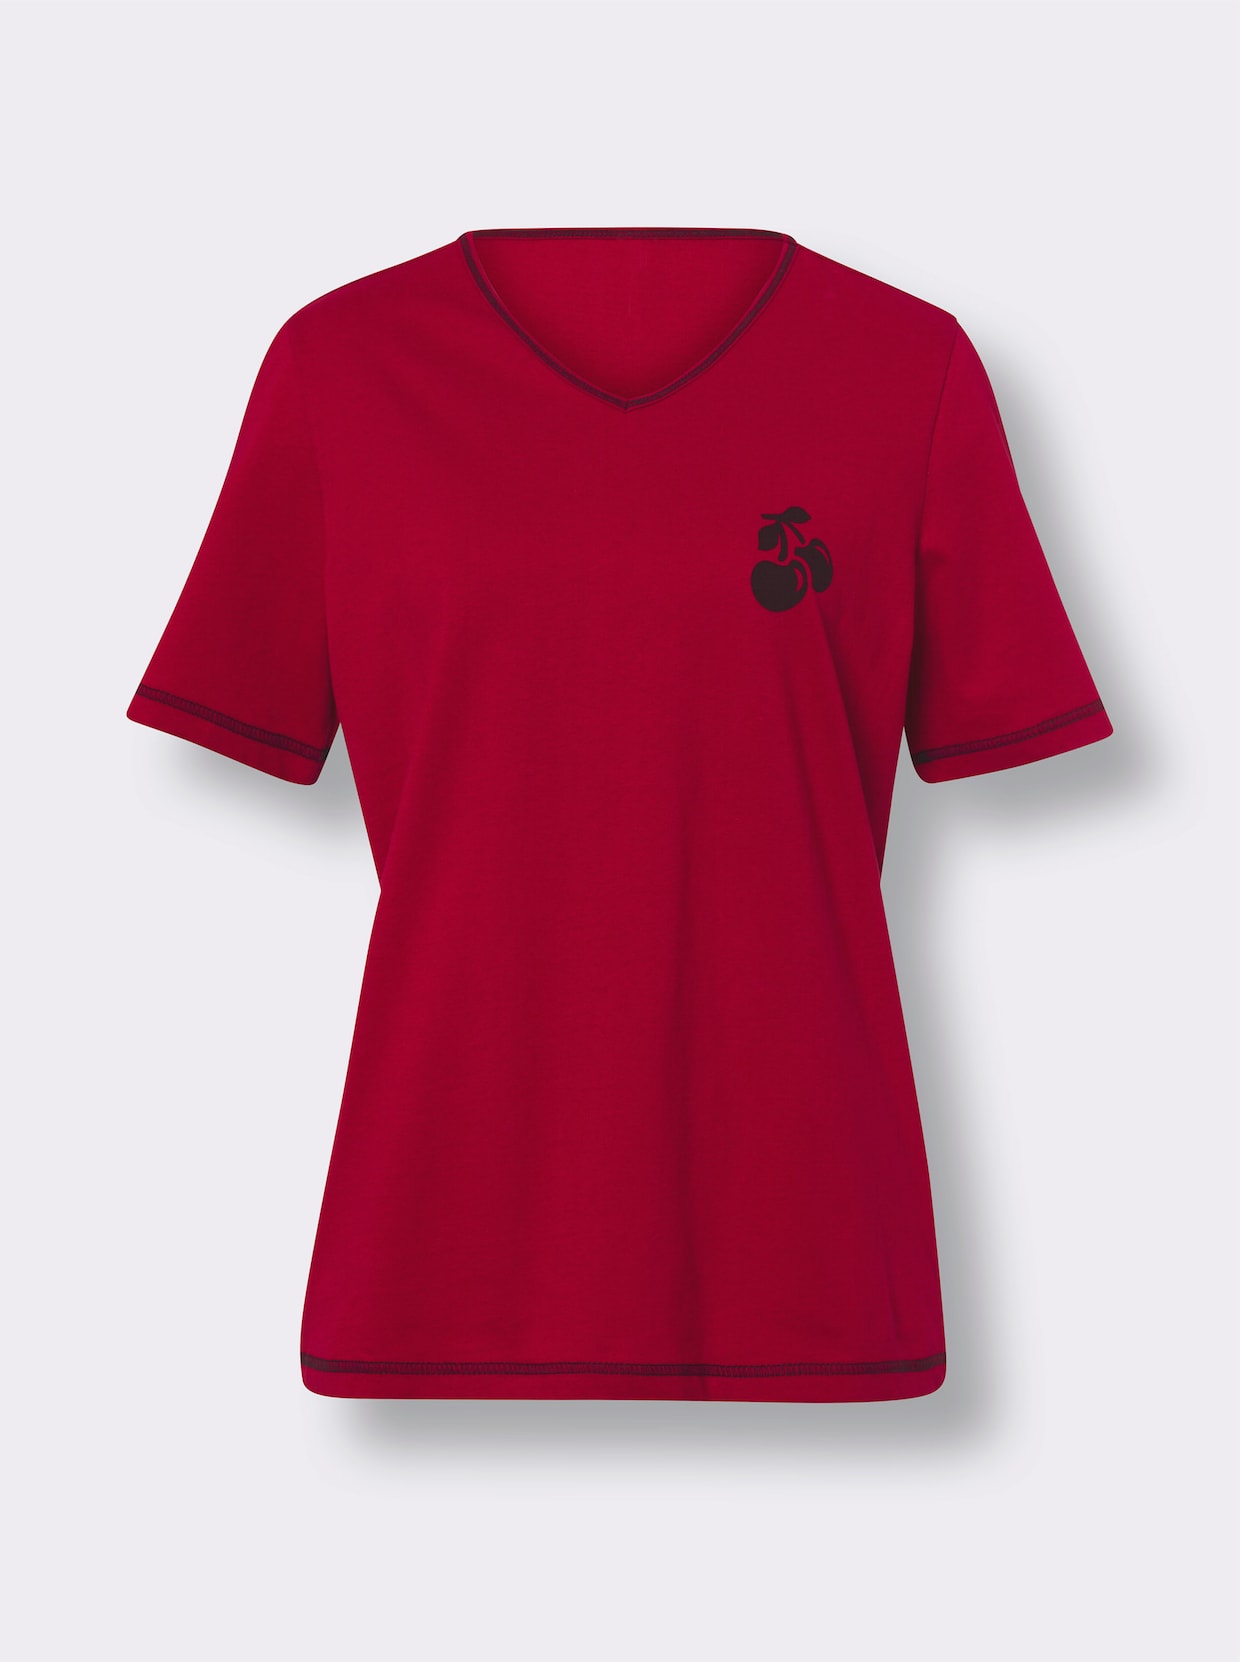 Capri-pyjama - rood/zwart geprint